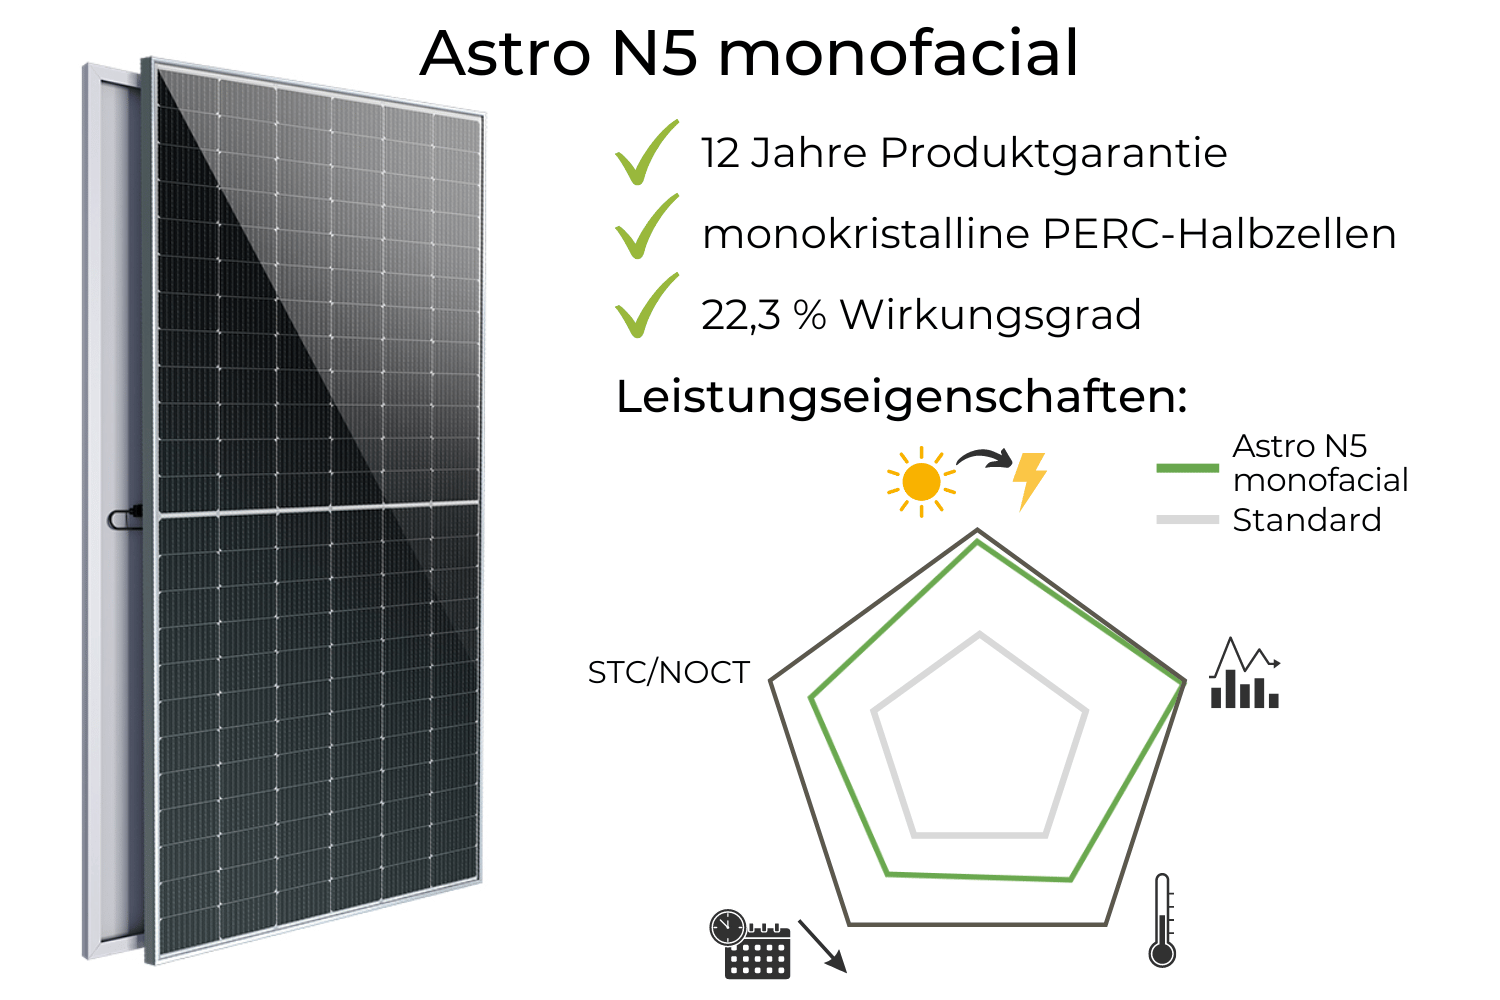 Astronergy Astro N5 monofacial